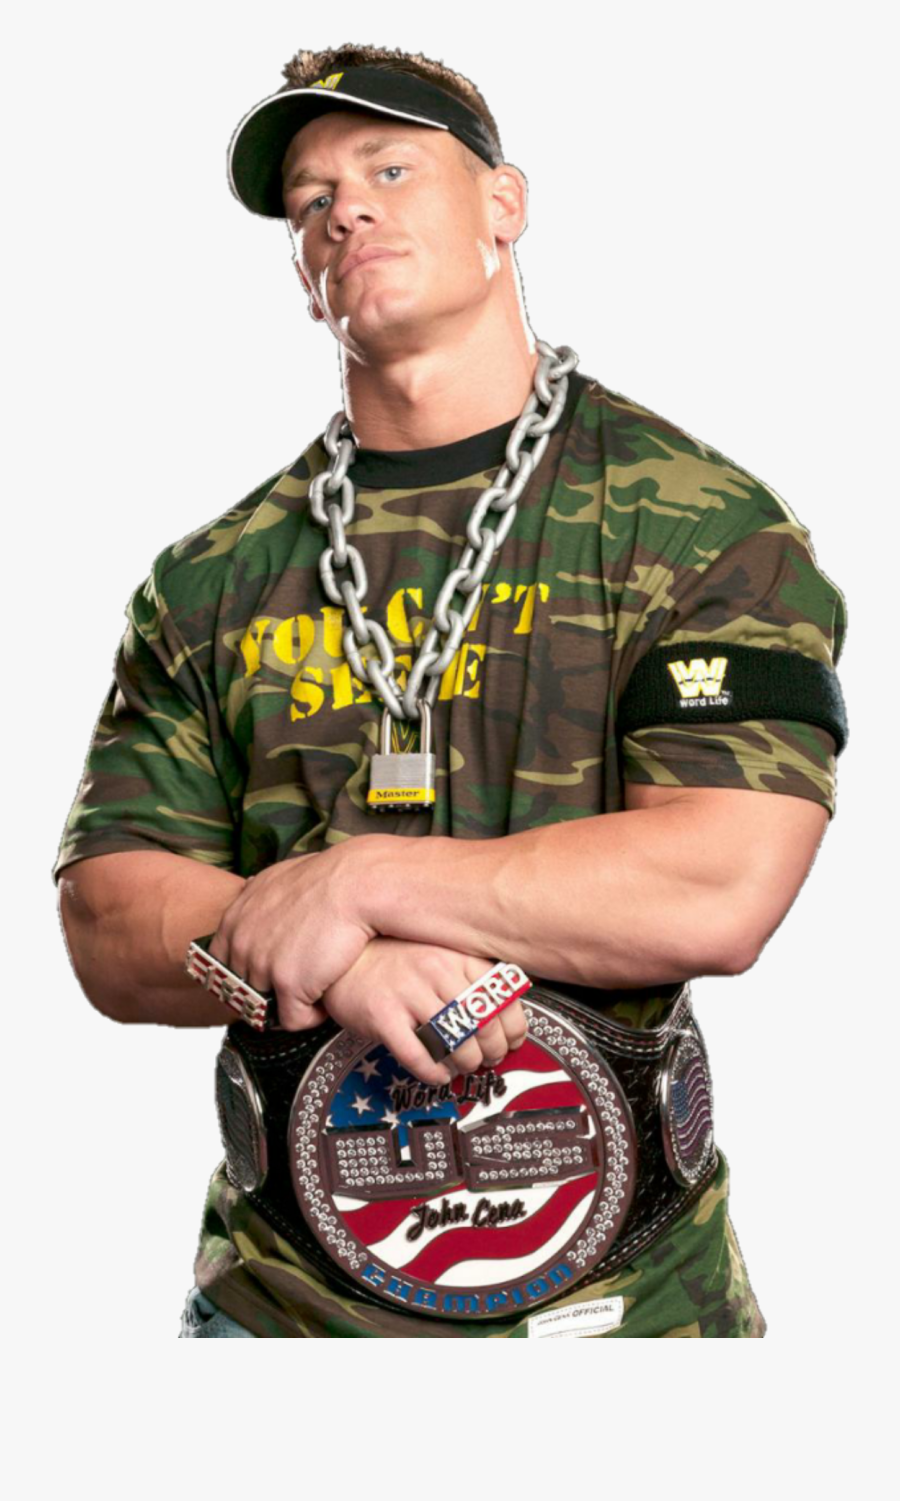 Transparent John Cena Clipart - John Cena Us Champion 2004, Transparent Clipart